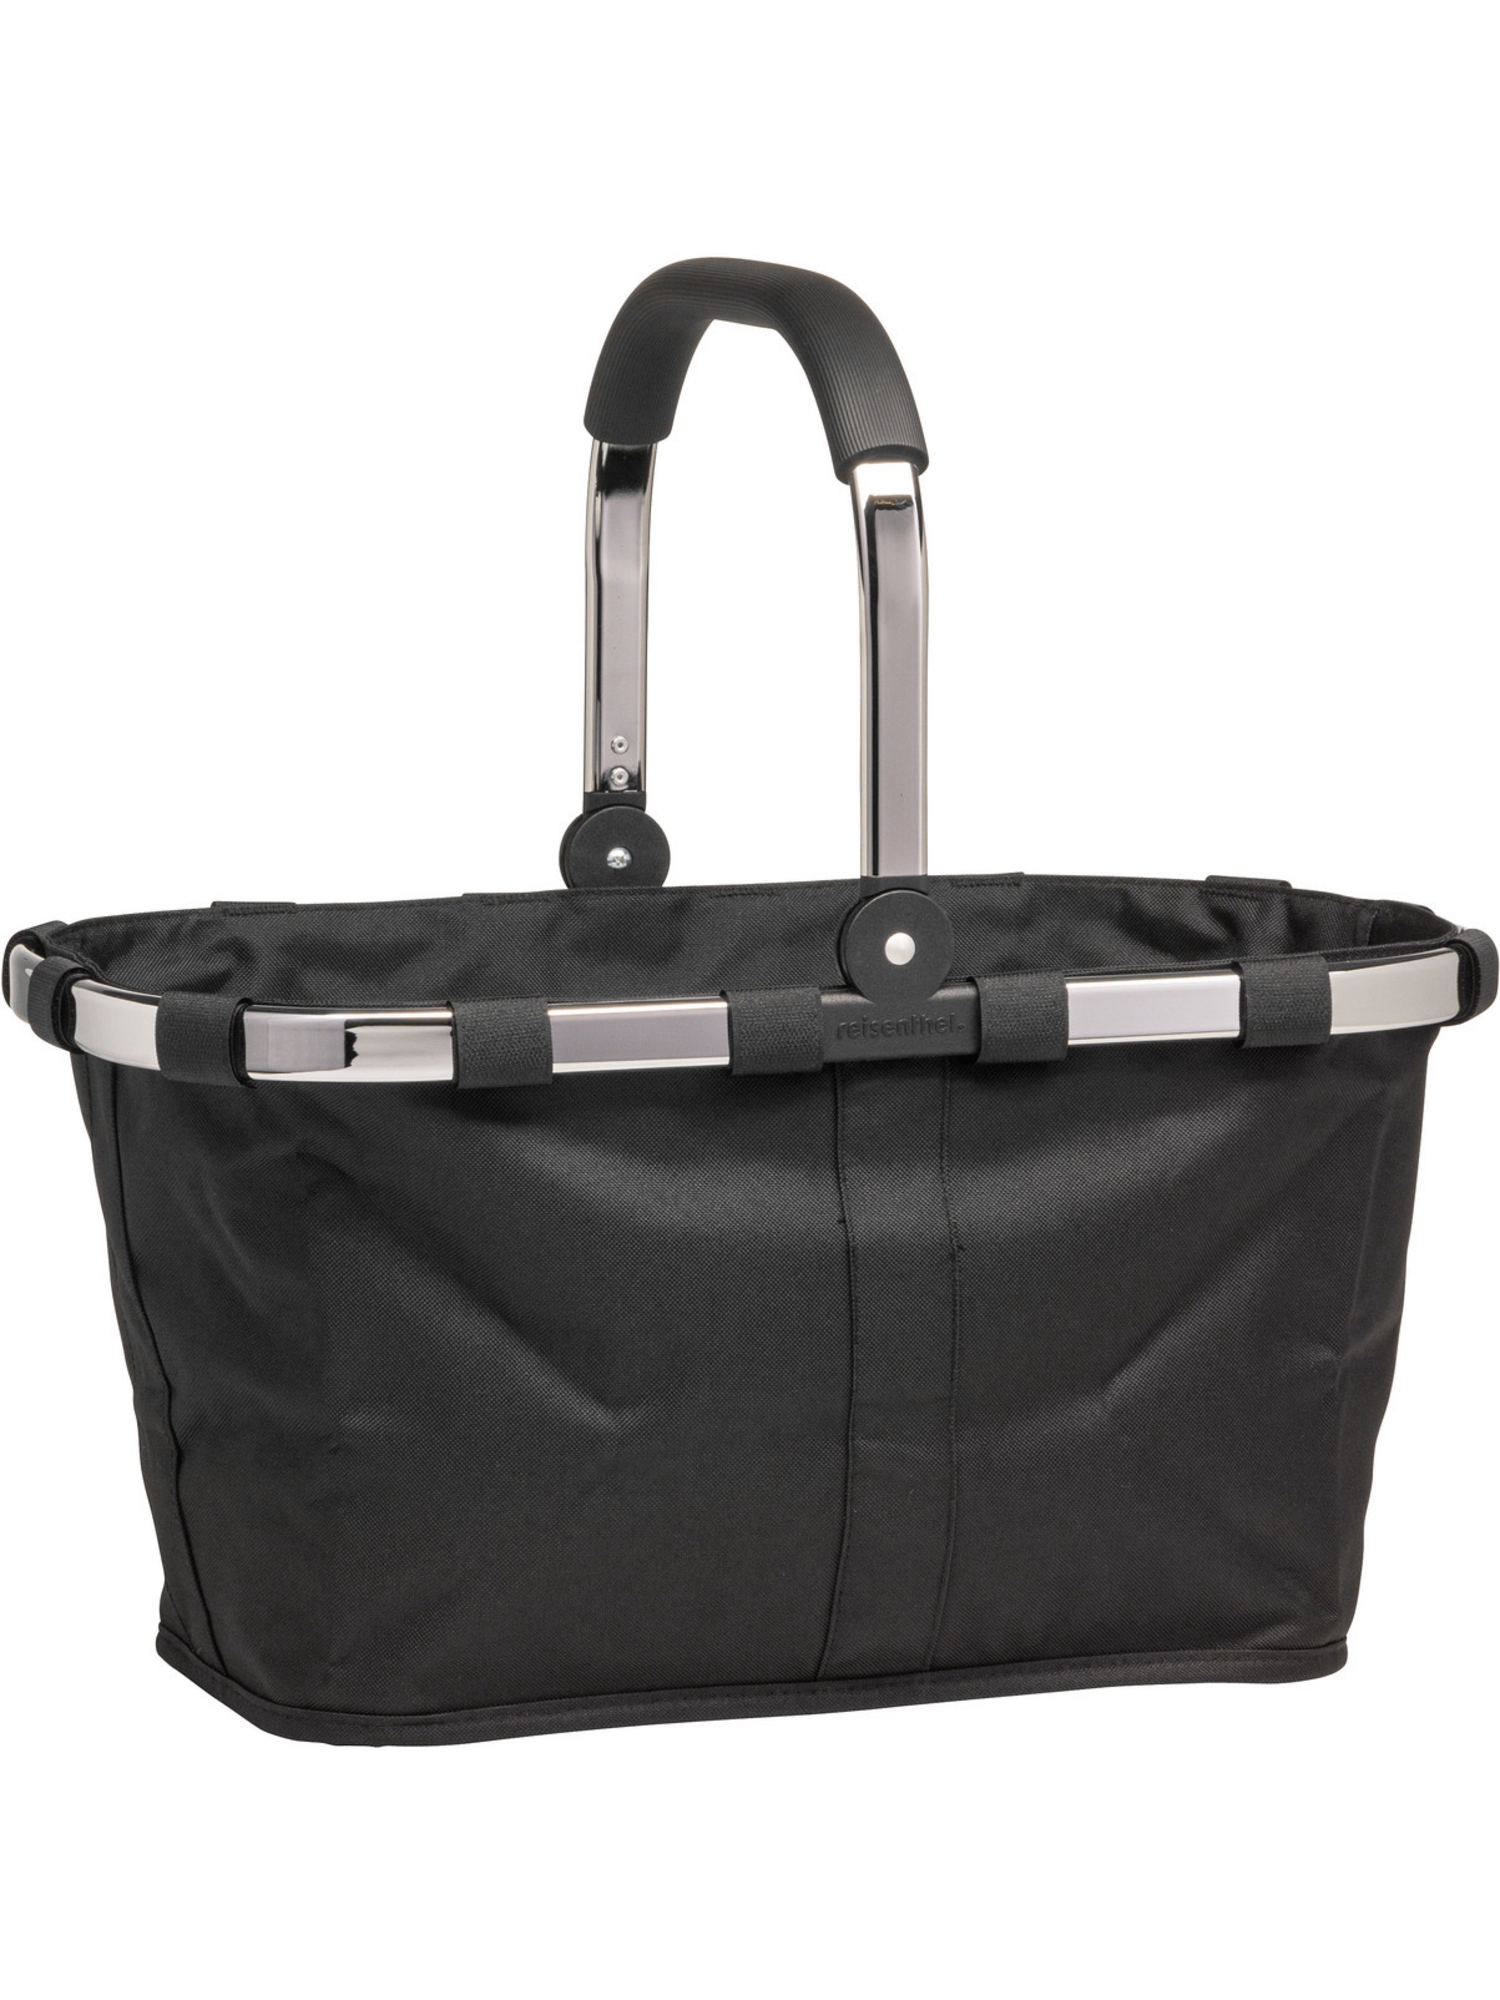 Сумка шоппер Reisenthel Einkaufstasche carrybag frame chrome, платиновый/черный цена и фото